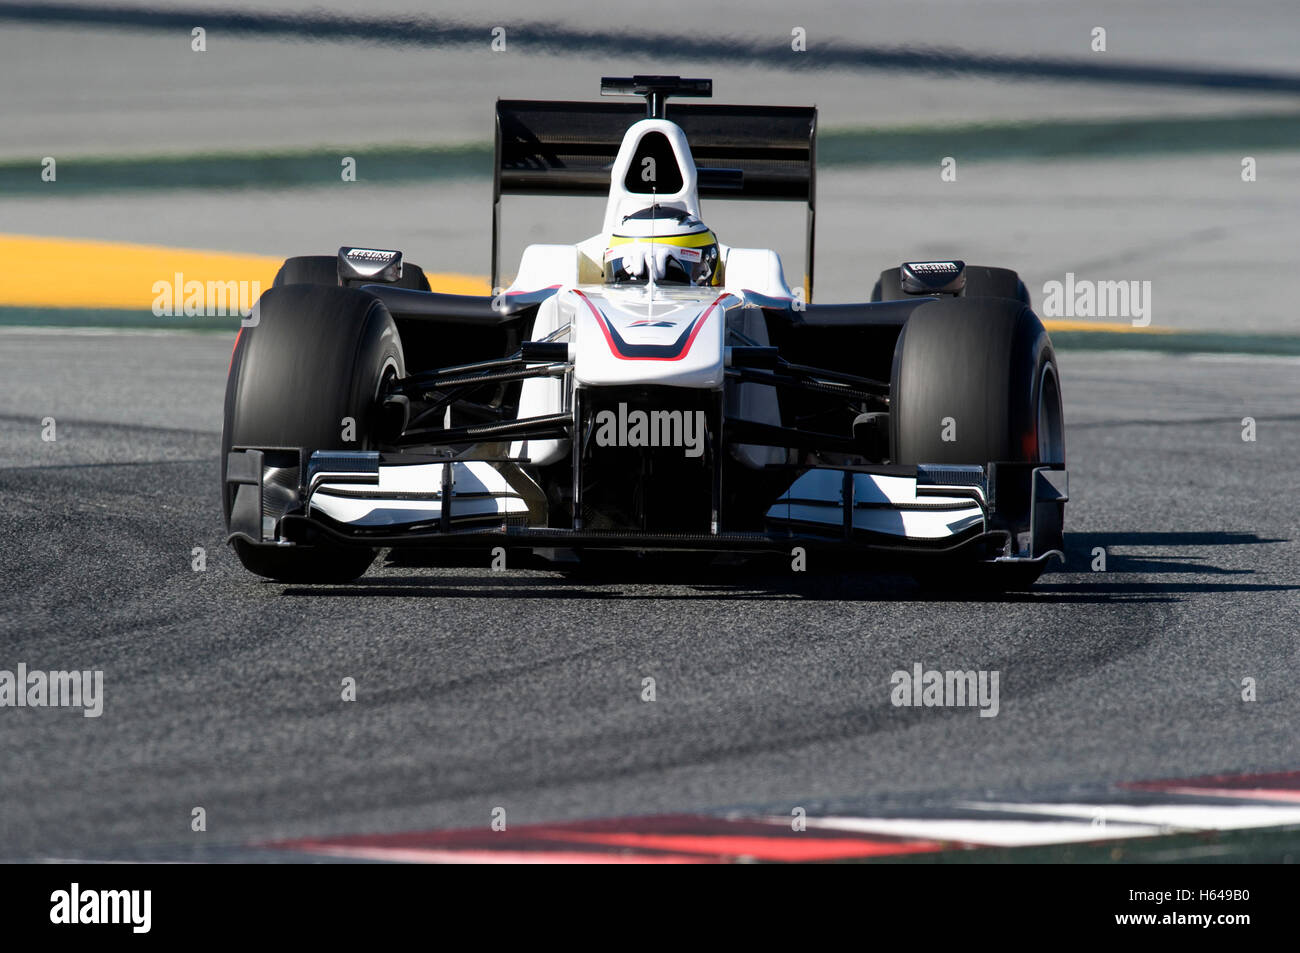 Motorsports, Pedro de la Rosa, SPA, in the BMW Sauber C29 race car, Formula 1 testing at the Circuit de Catalunya race track in Stock Photo